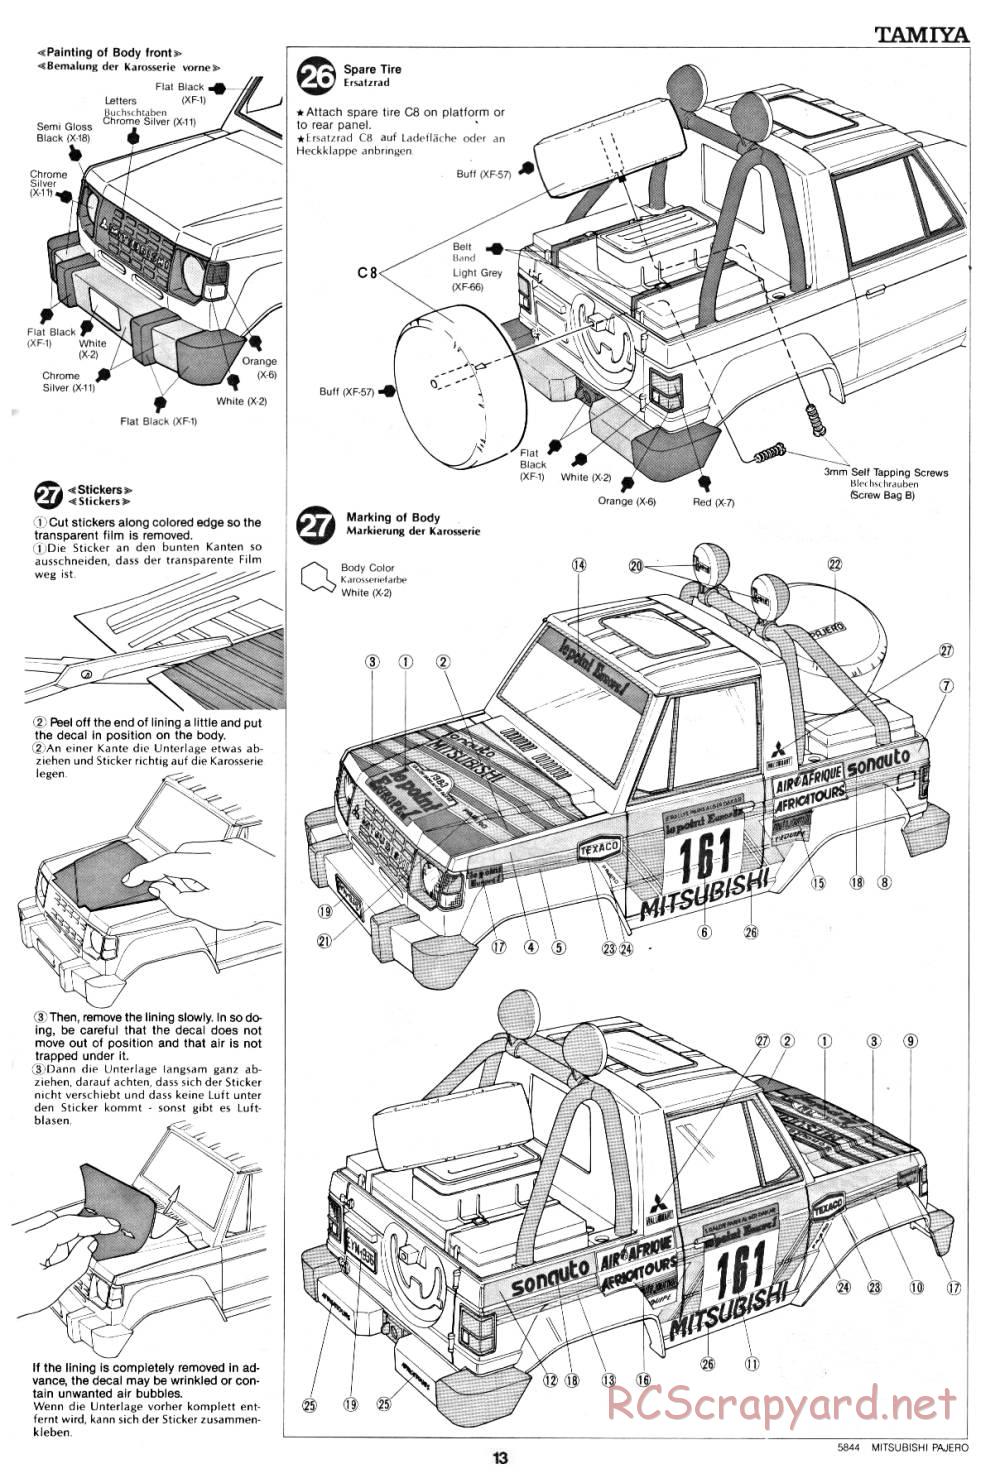 Tamiya - Mitsubishi Pajero - 58044 - Manual - Page 13